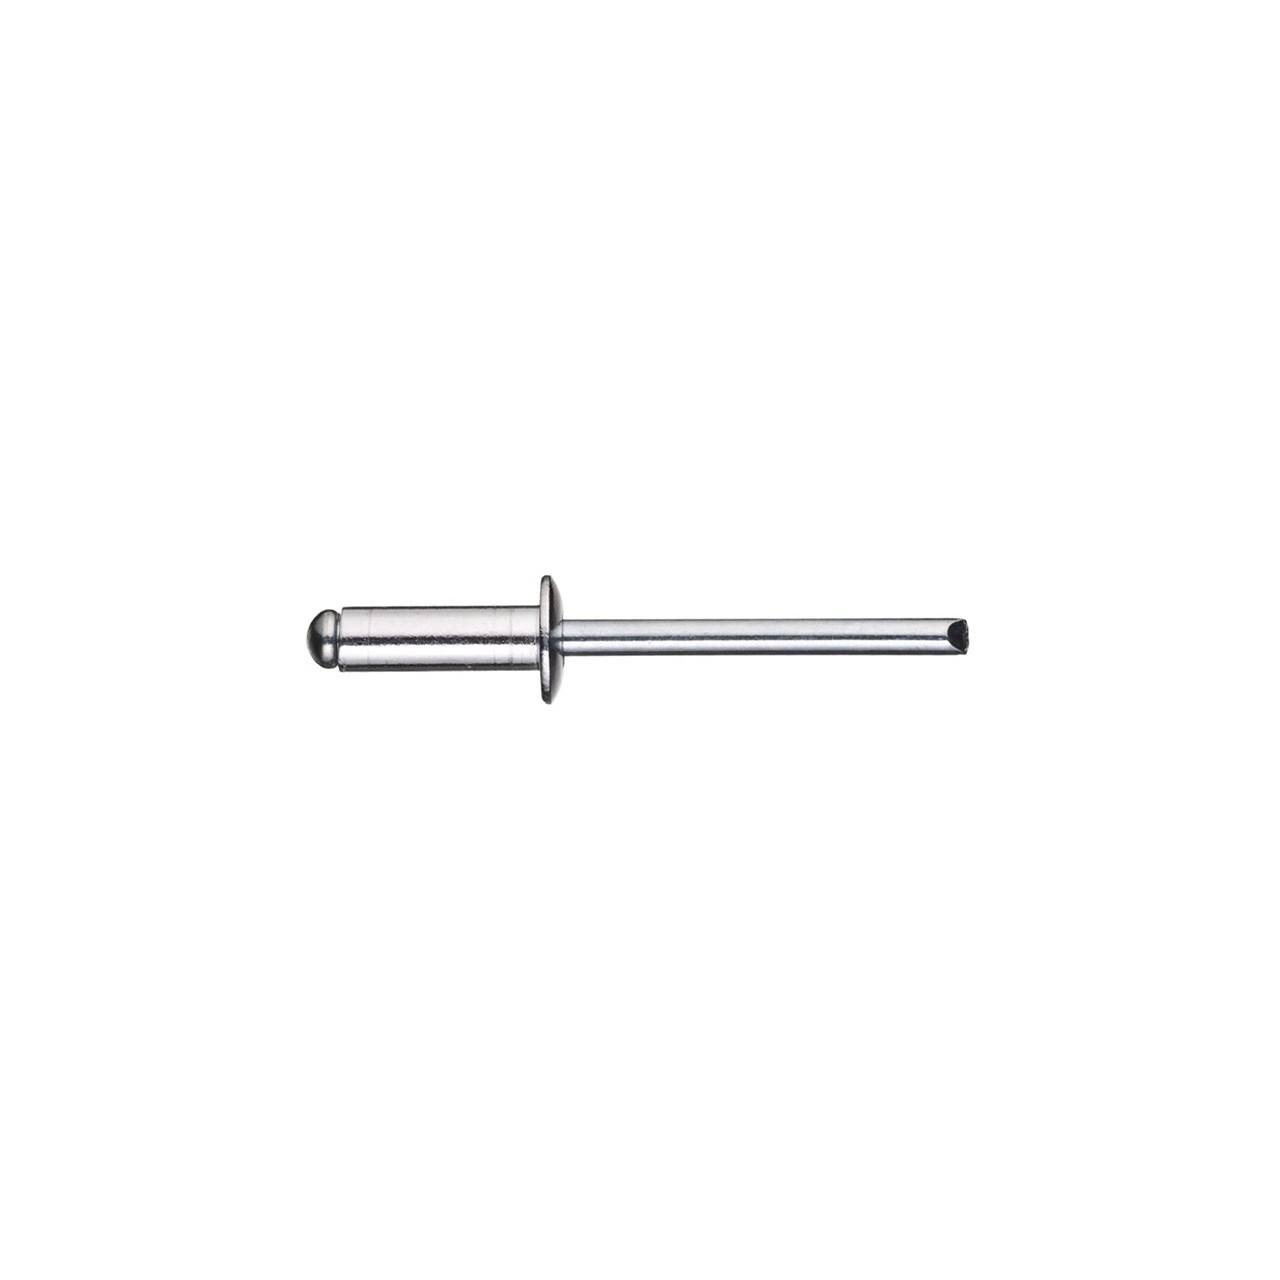 Remache tubular DIN-7337 estándar acero (Uds)